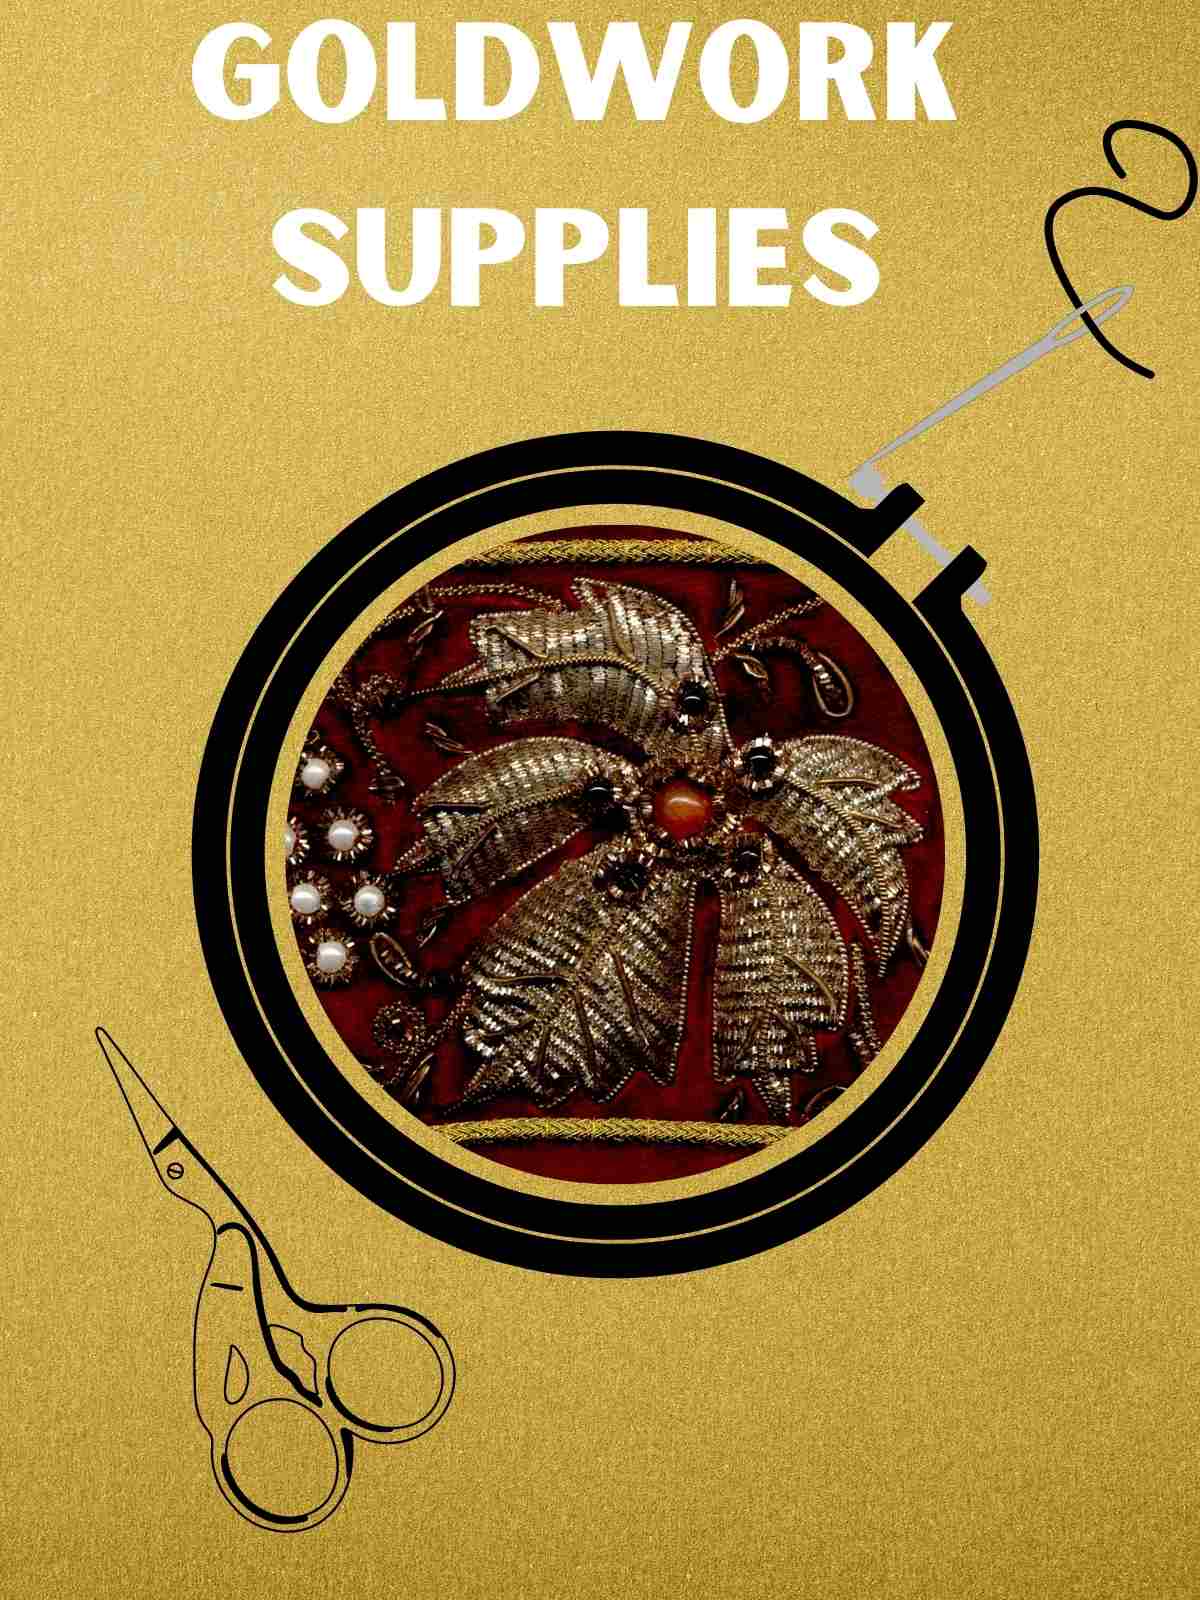 Goldwork Supplies for thread